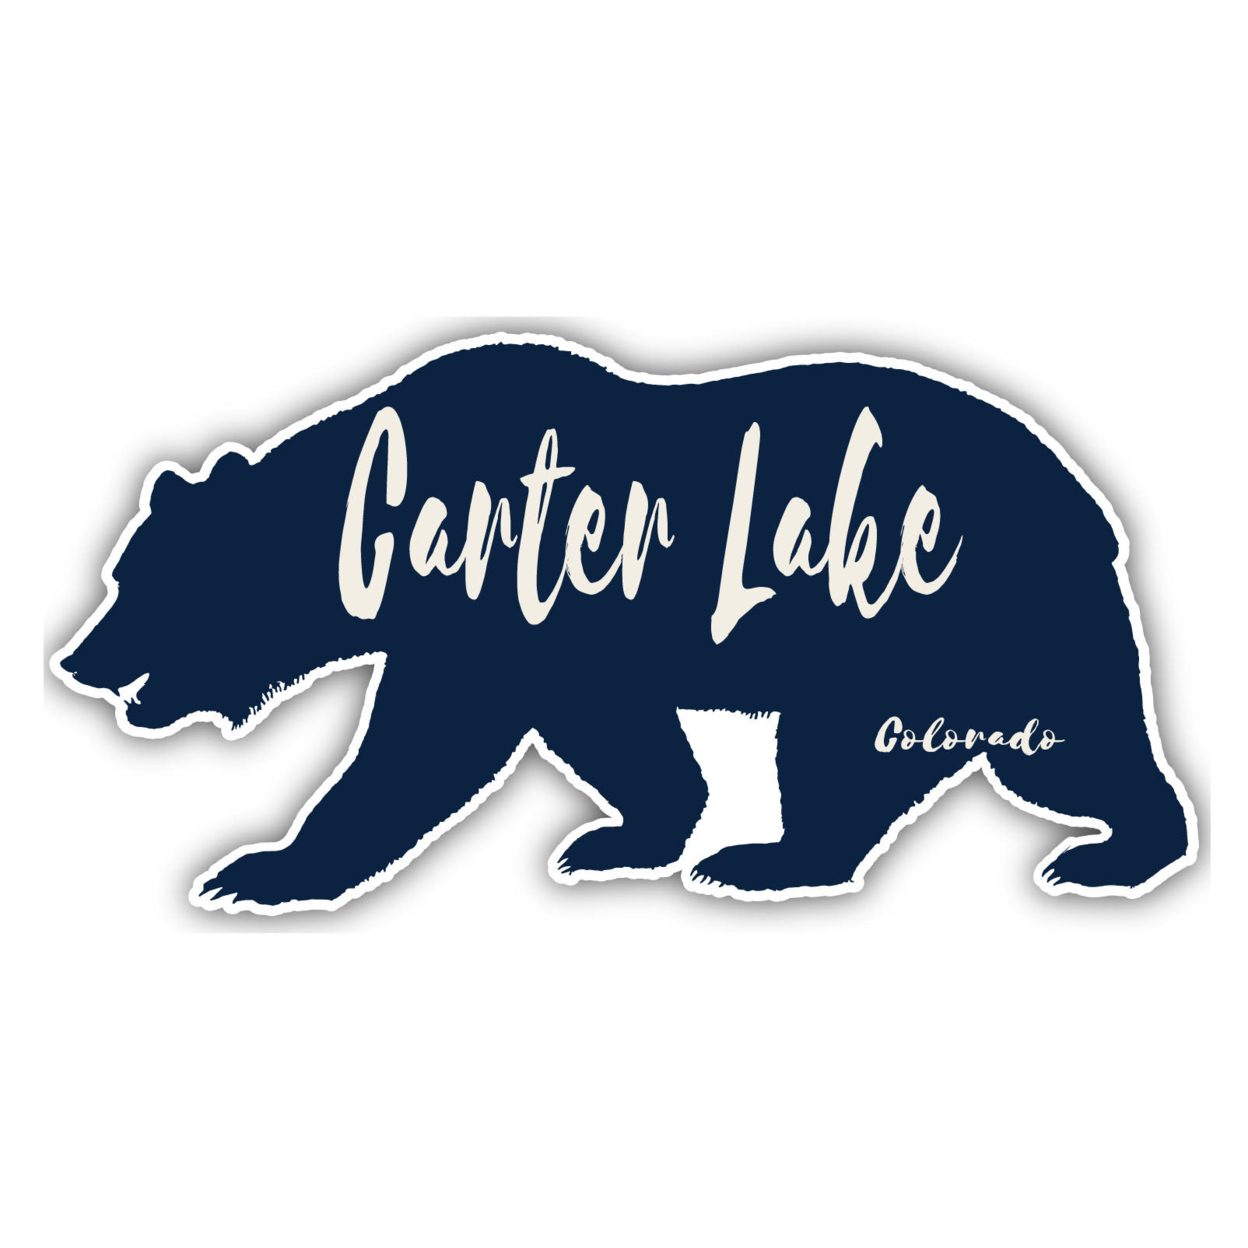 Carter Lake Colorado Souvenir Decorative Stickers (Choose Theme And Size) - Single Unit, 6-Inch, Bear